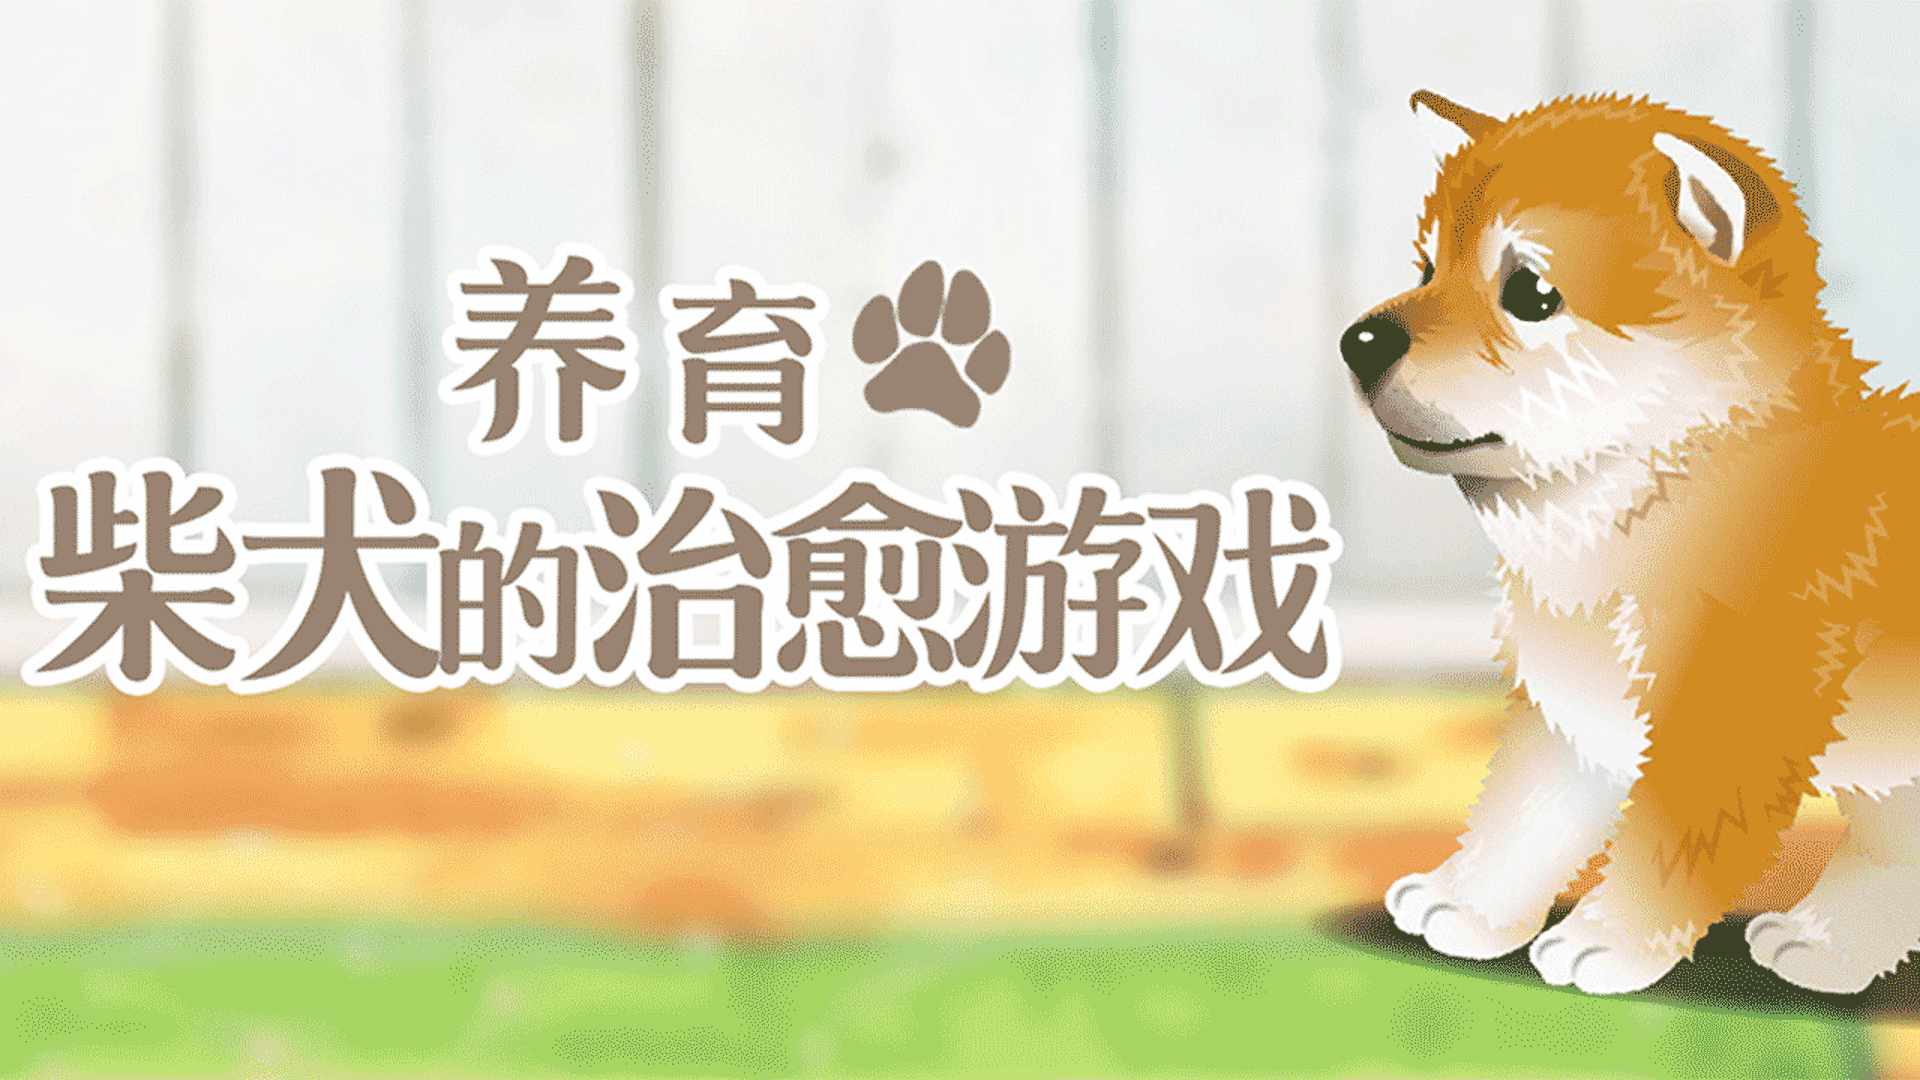 Banner of 養育柴犬的治愈遊戲 